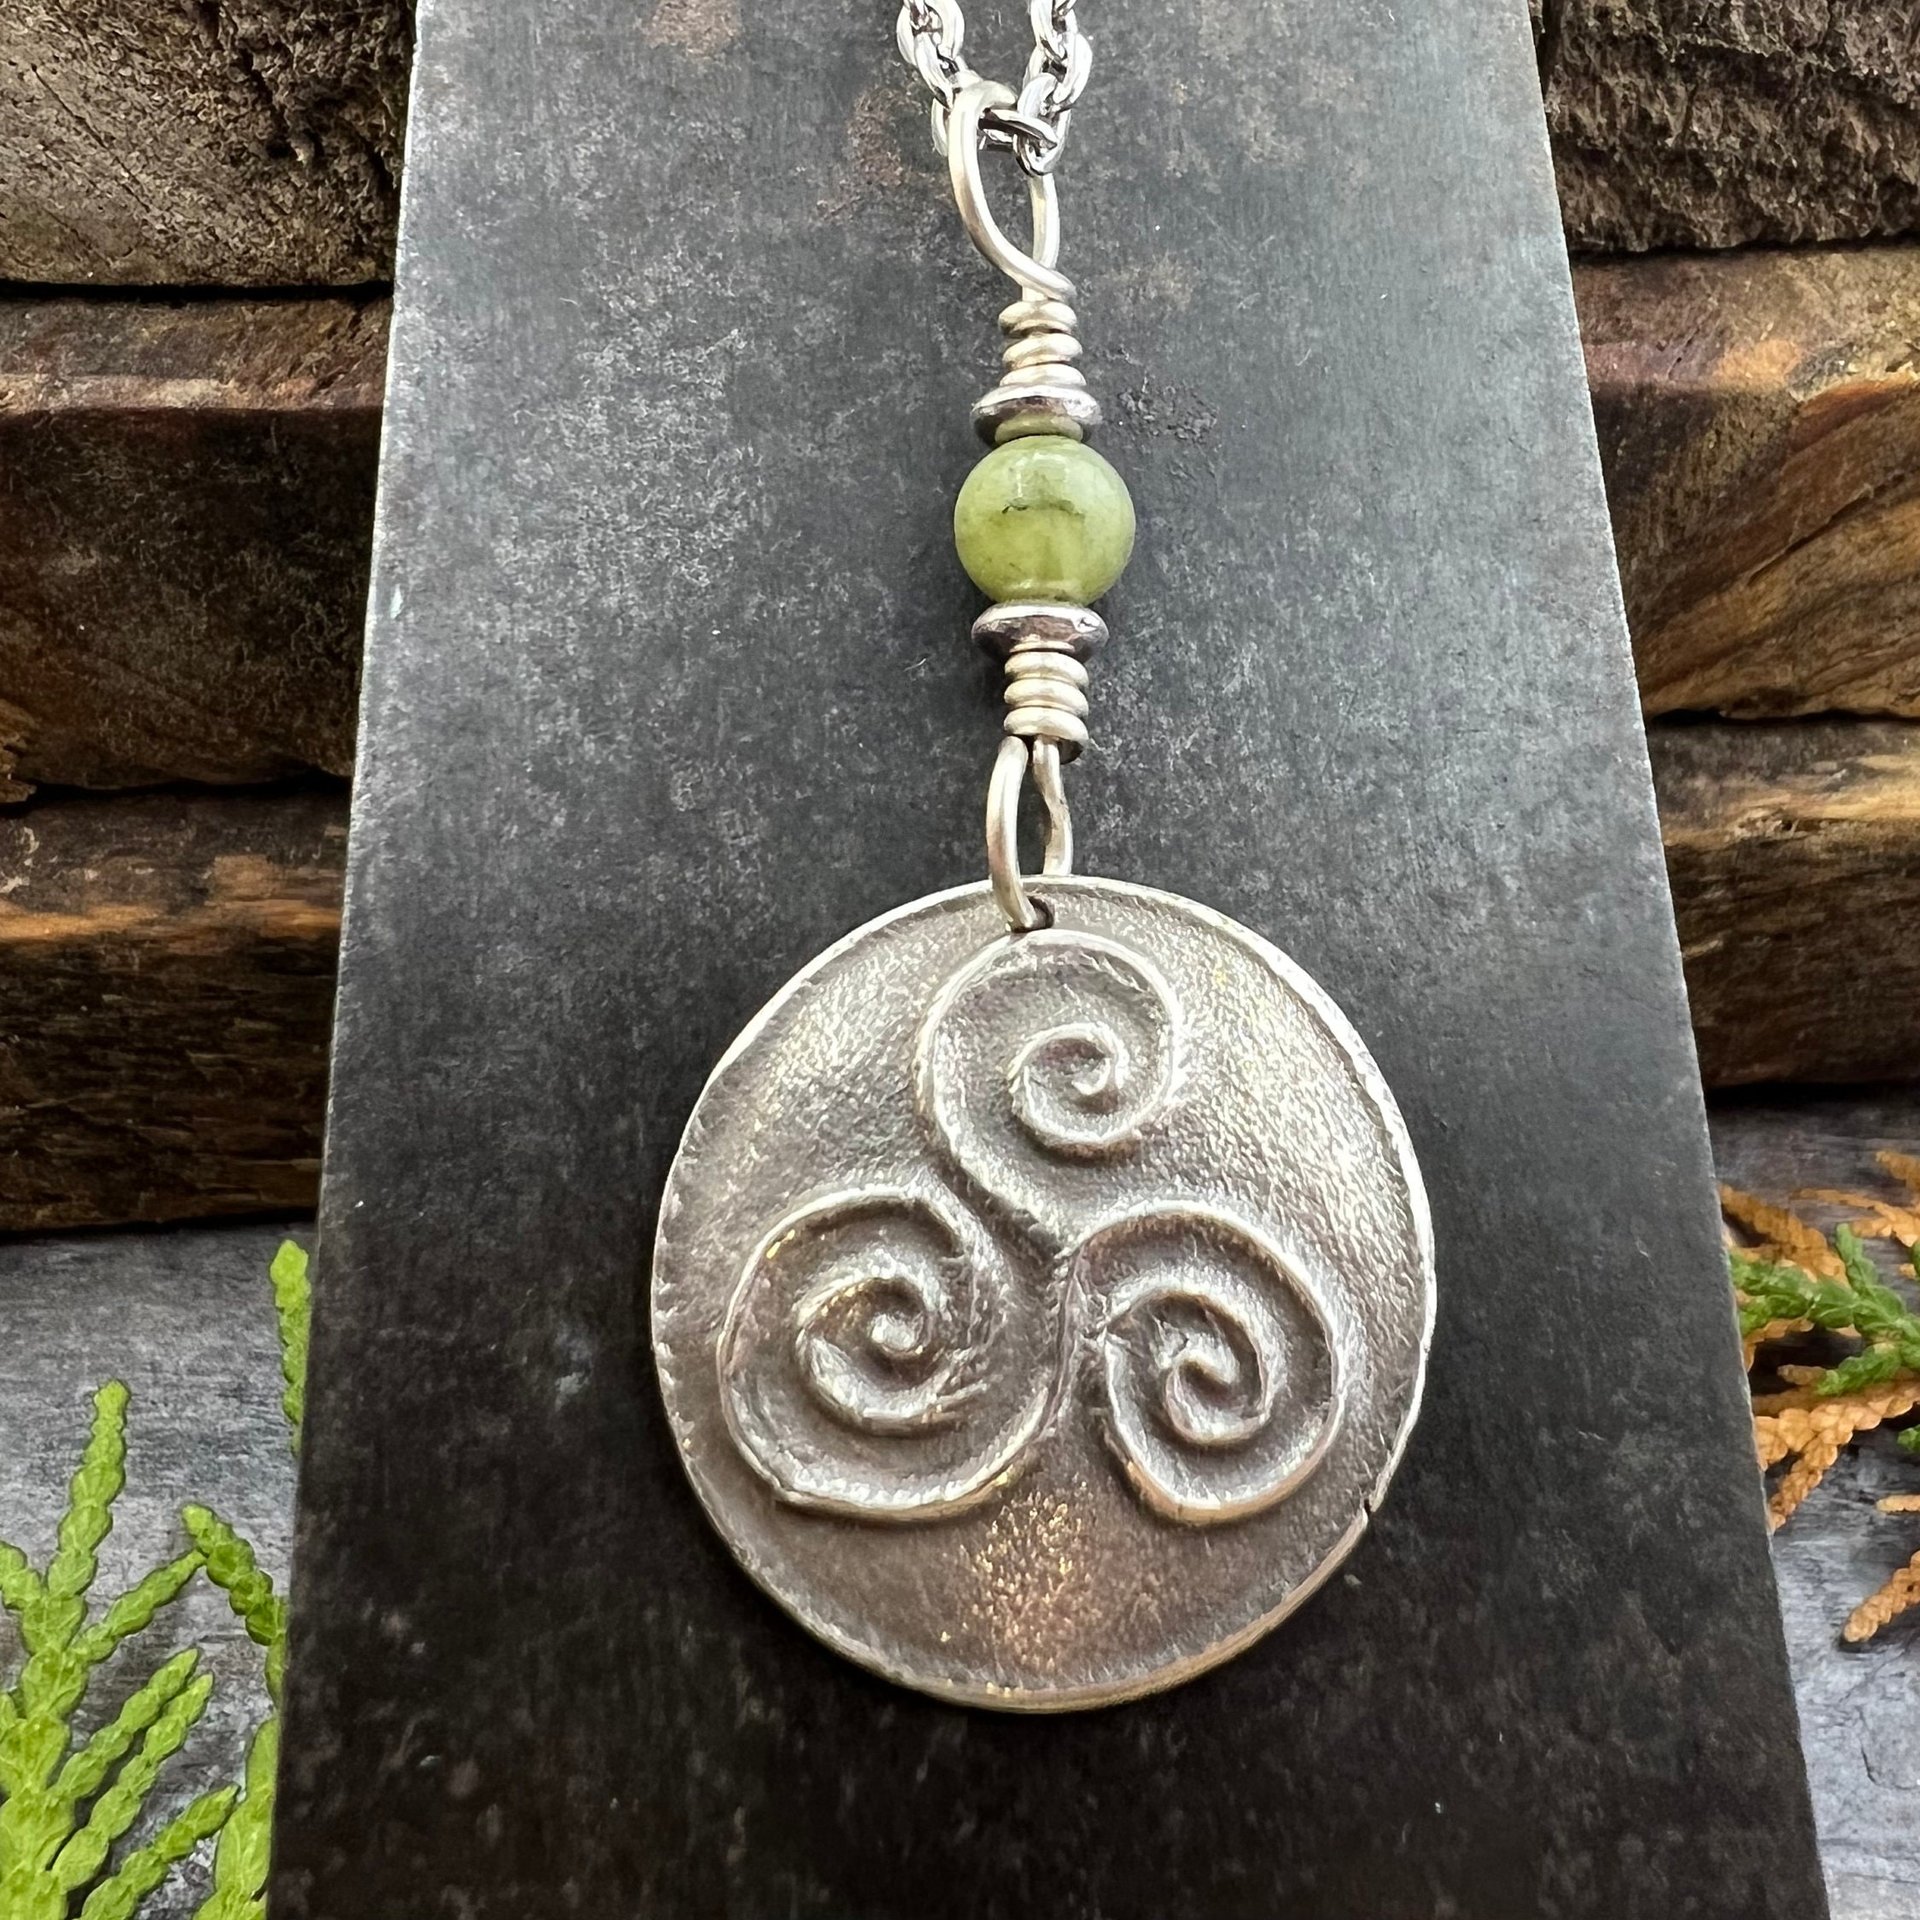 Sterling Silver Triskele Pendant, Triskelion Triple Spiral, Connemara Marble, Irish Celtic Jewelry, Pagan Art, Leather & Vegan Cords, Chains